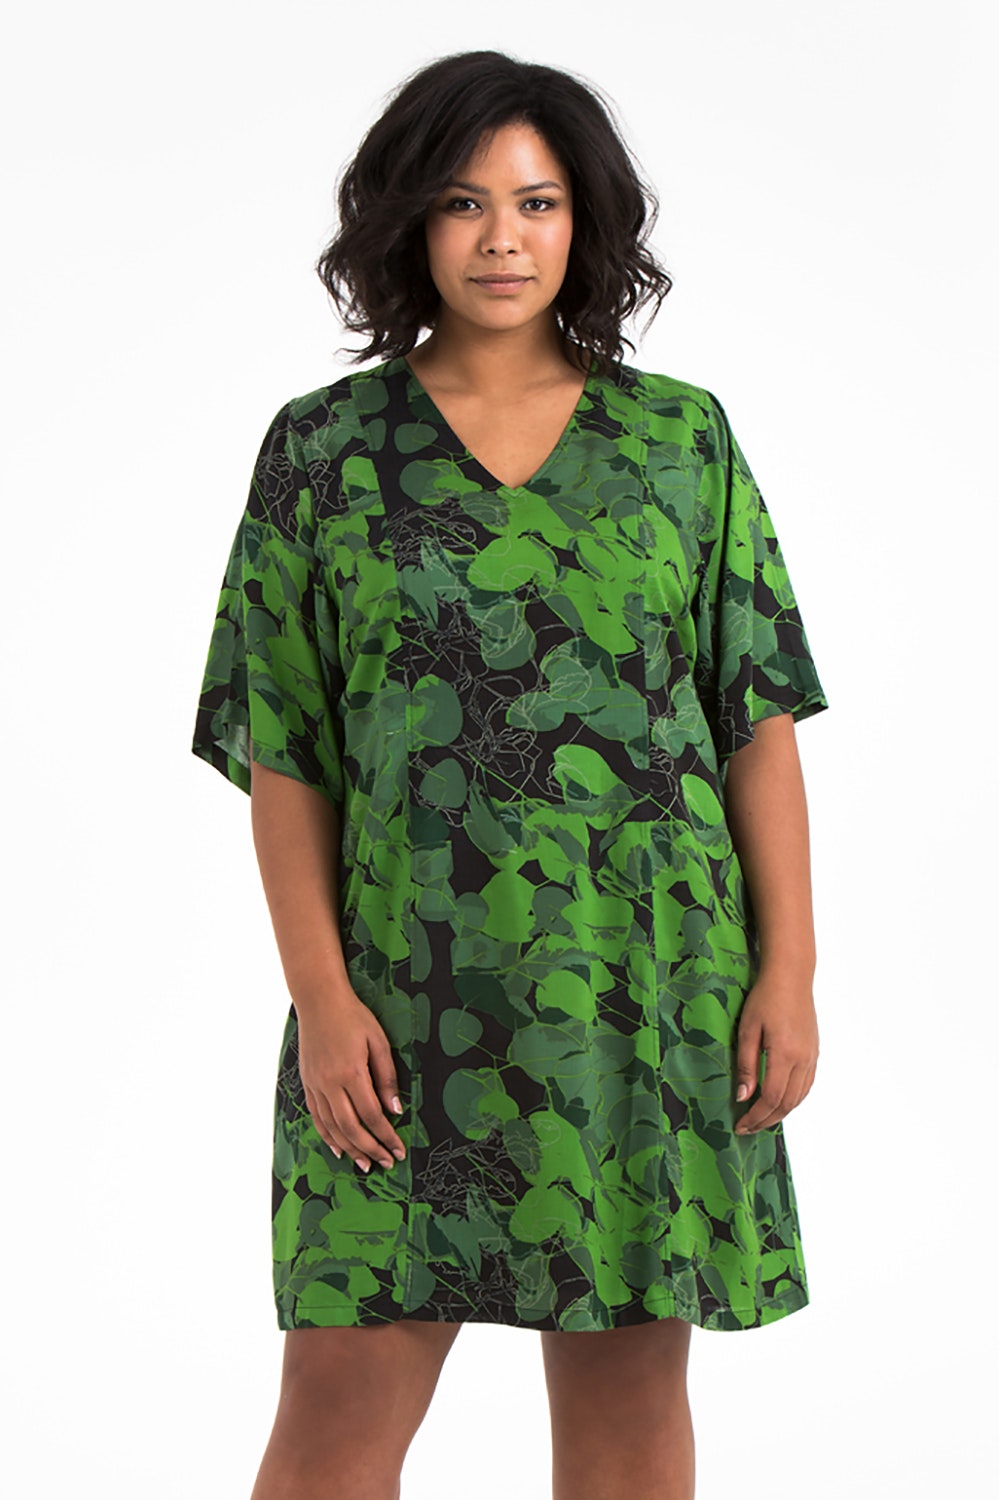 Jonna svart & grön klänning | Stora storlekar | AliceDot.com - Damkläder  Stora Storlekar • AliceDot